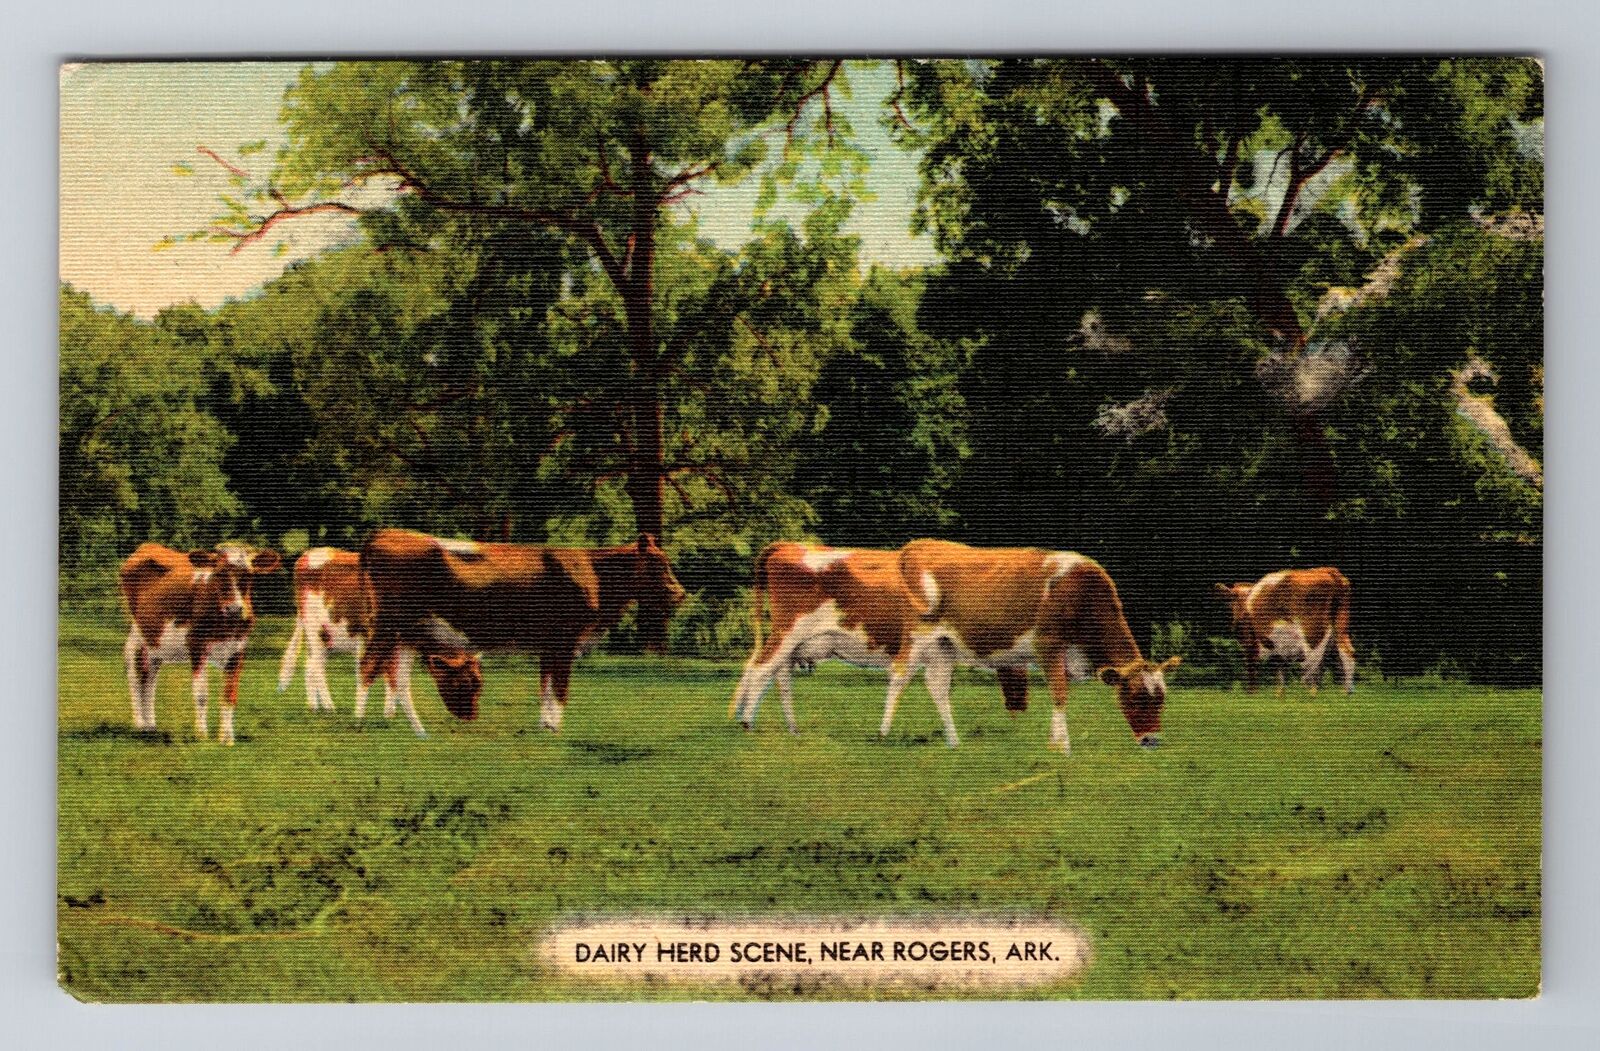 Rogers AR-Arkansas, Dairy Herd Scene, Antique, Vintage Souvenir Postcard